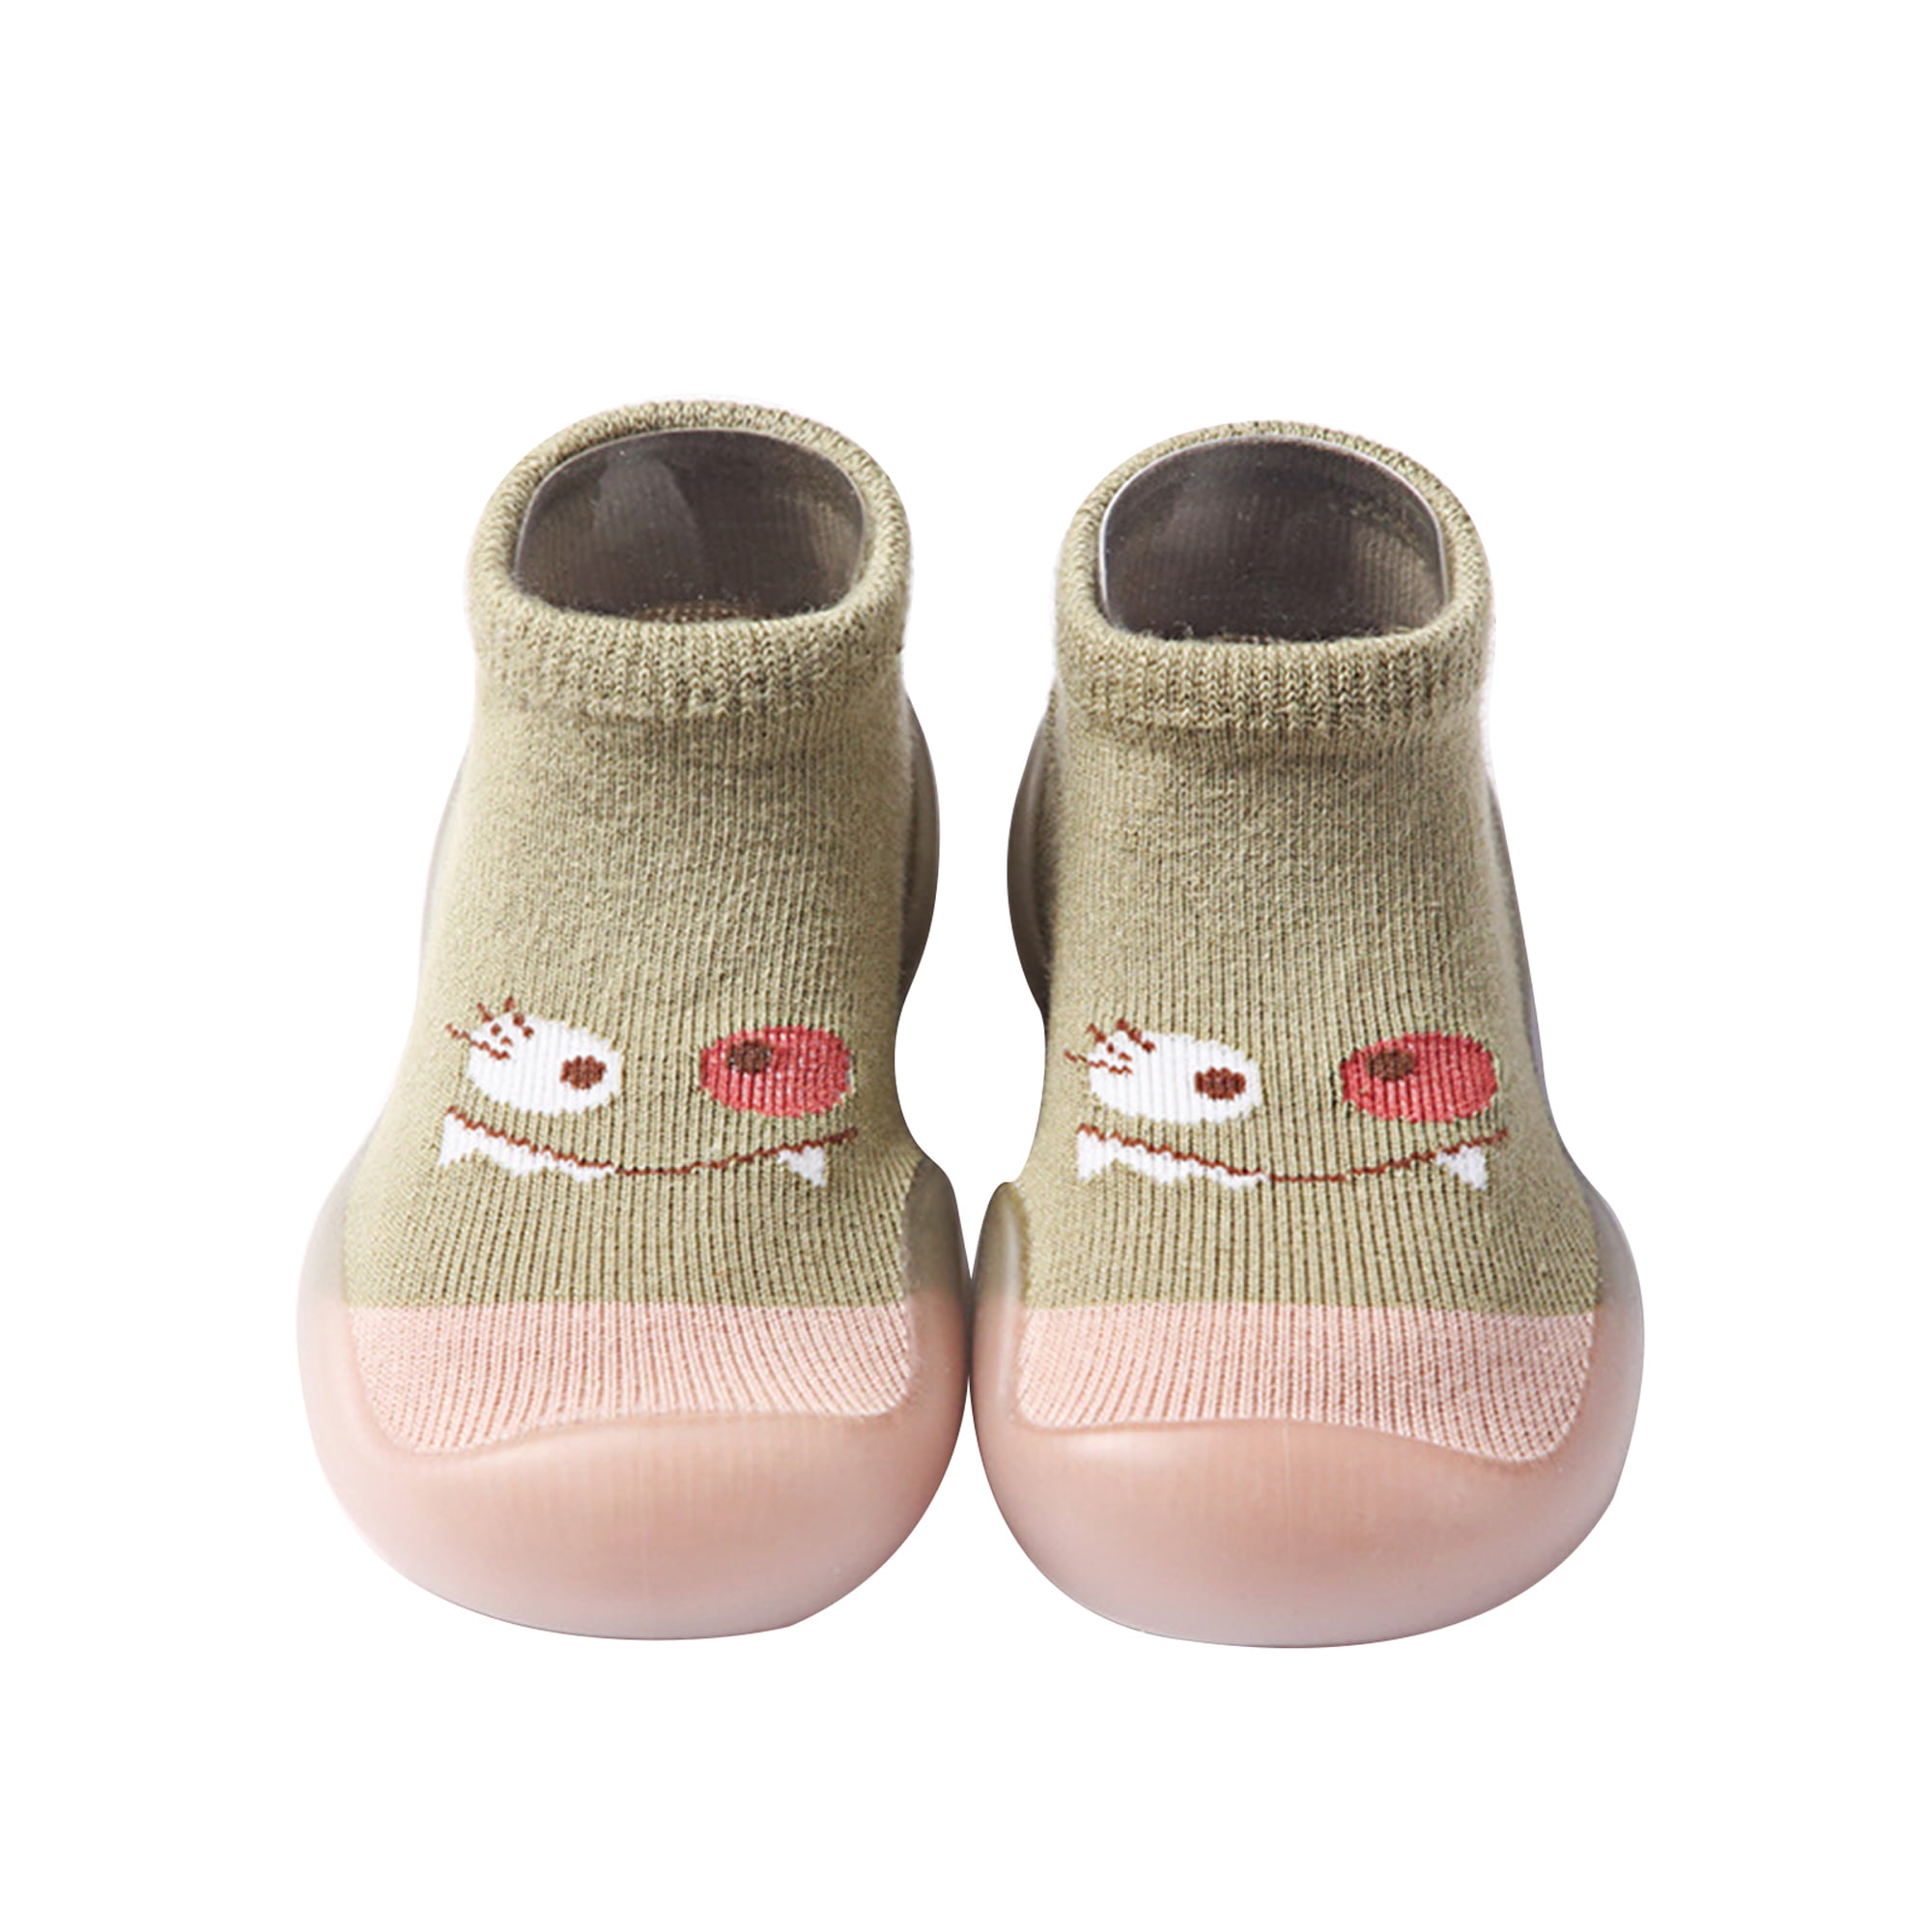 Infant Baby Non-slip Floor Socks Shoes Toddler Soft Indoor Rubber Socks Age 1-4